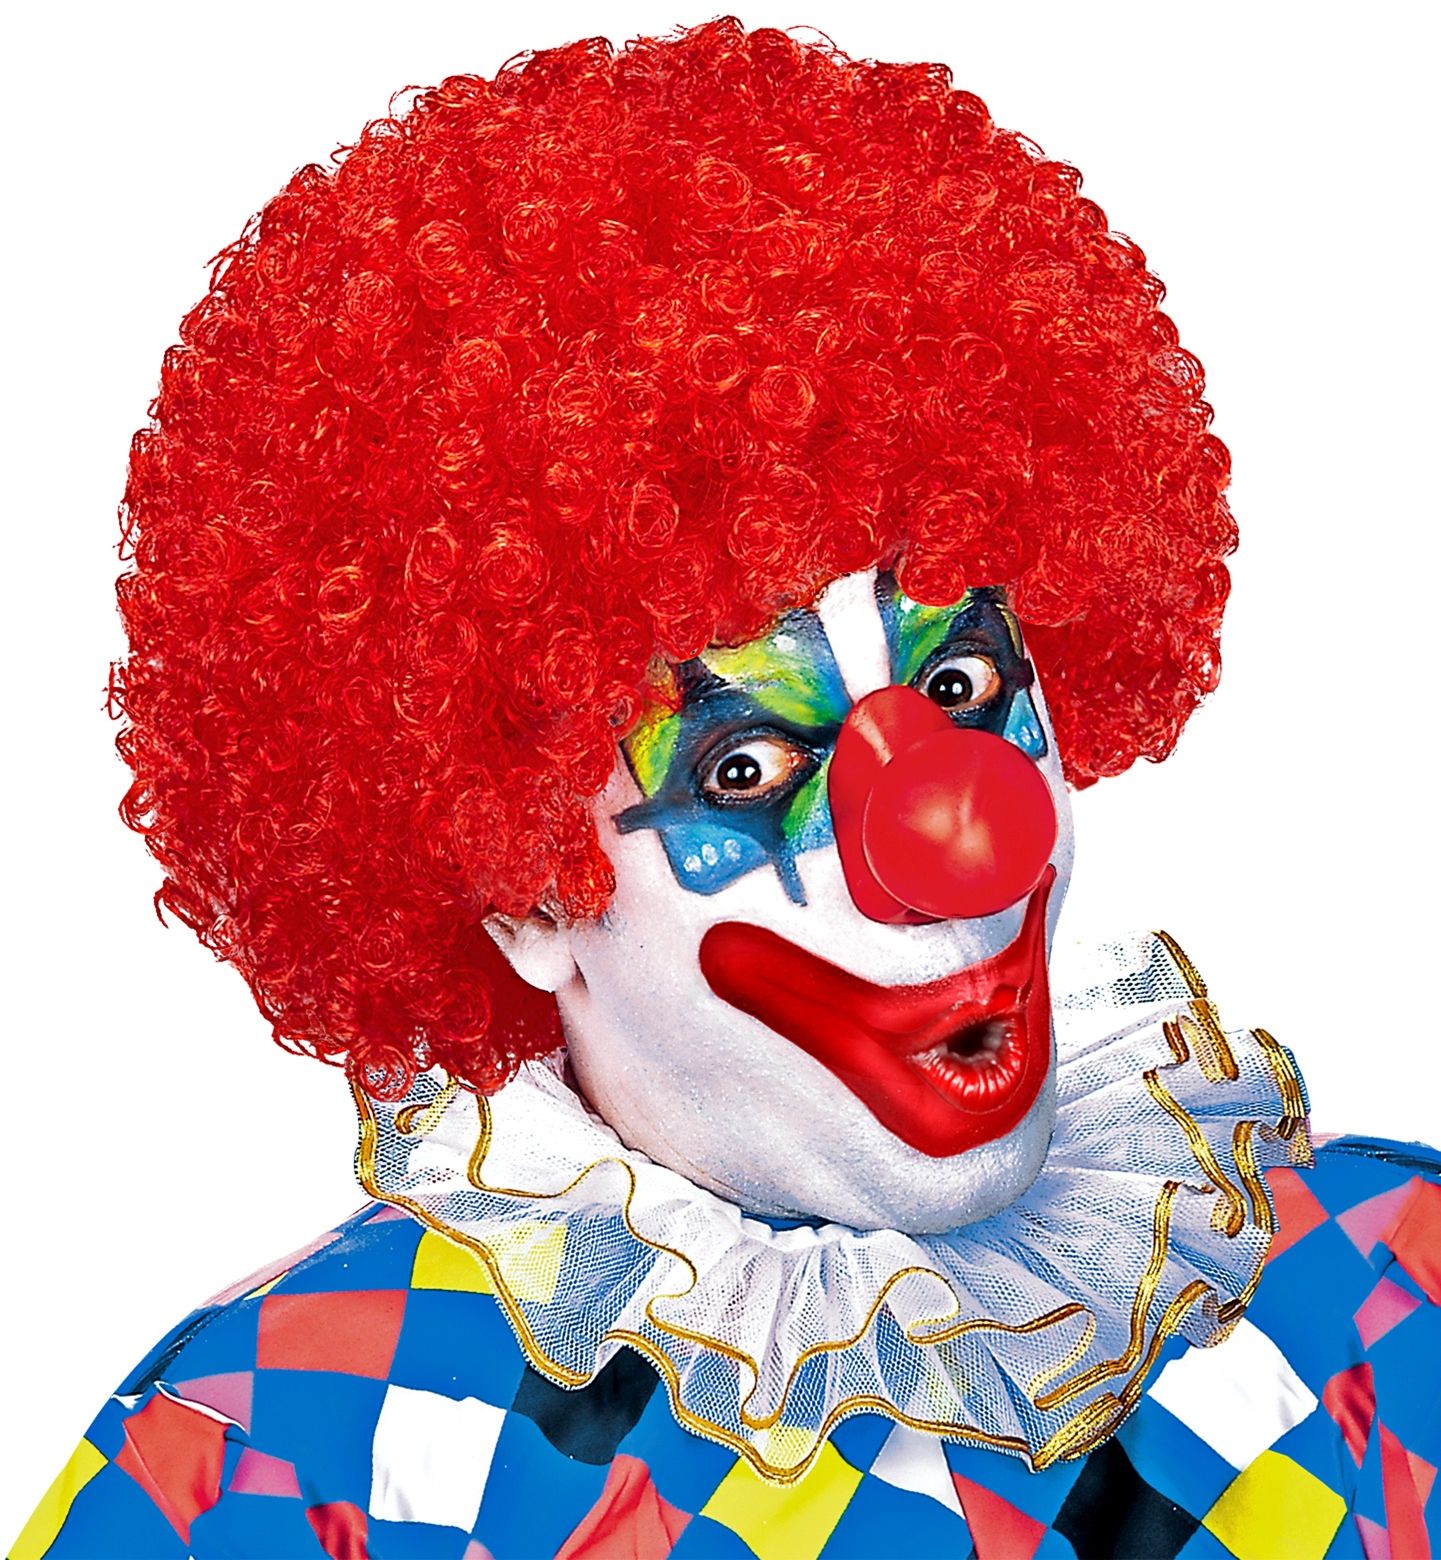 slagader Voorbijganger map Rode clowns pruik | Carnavalskleding.nl